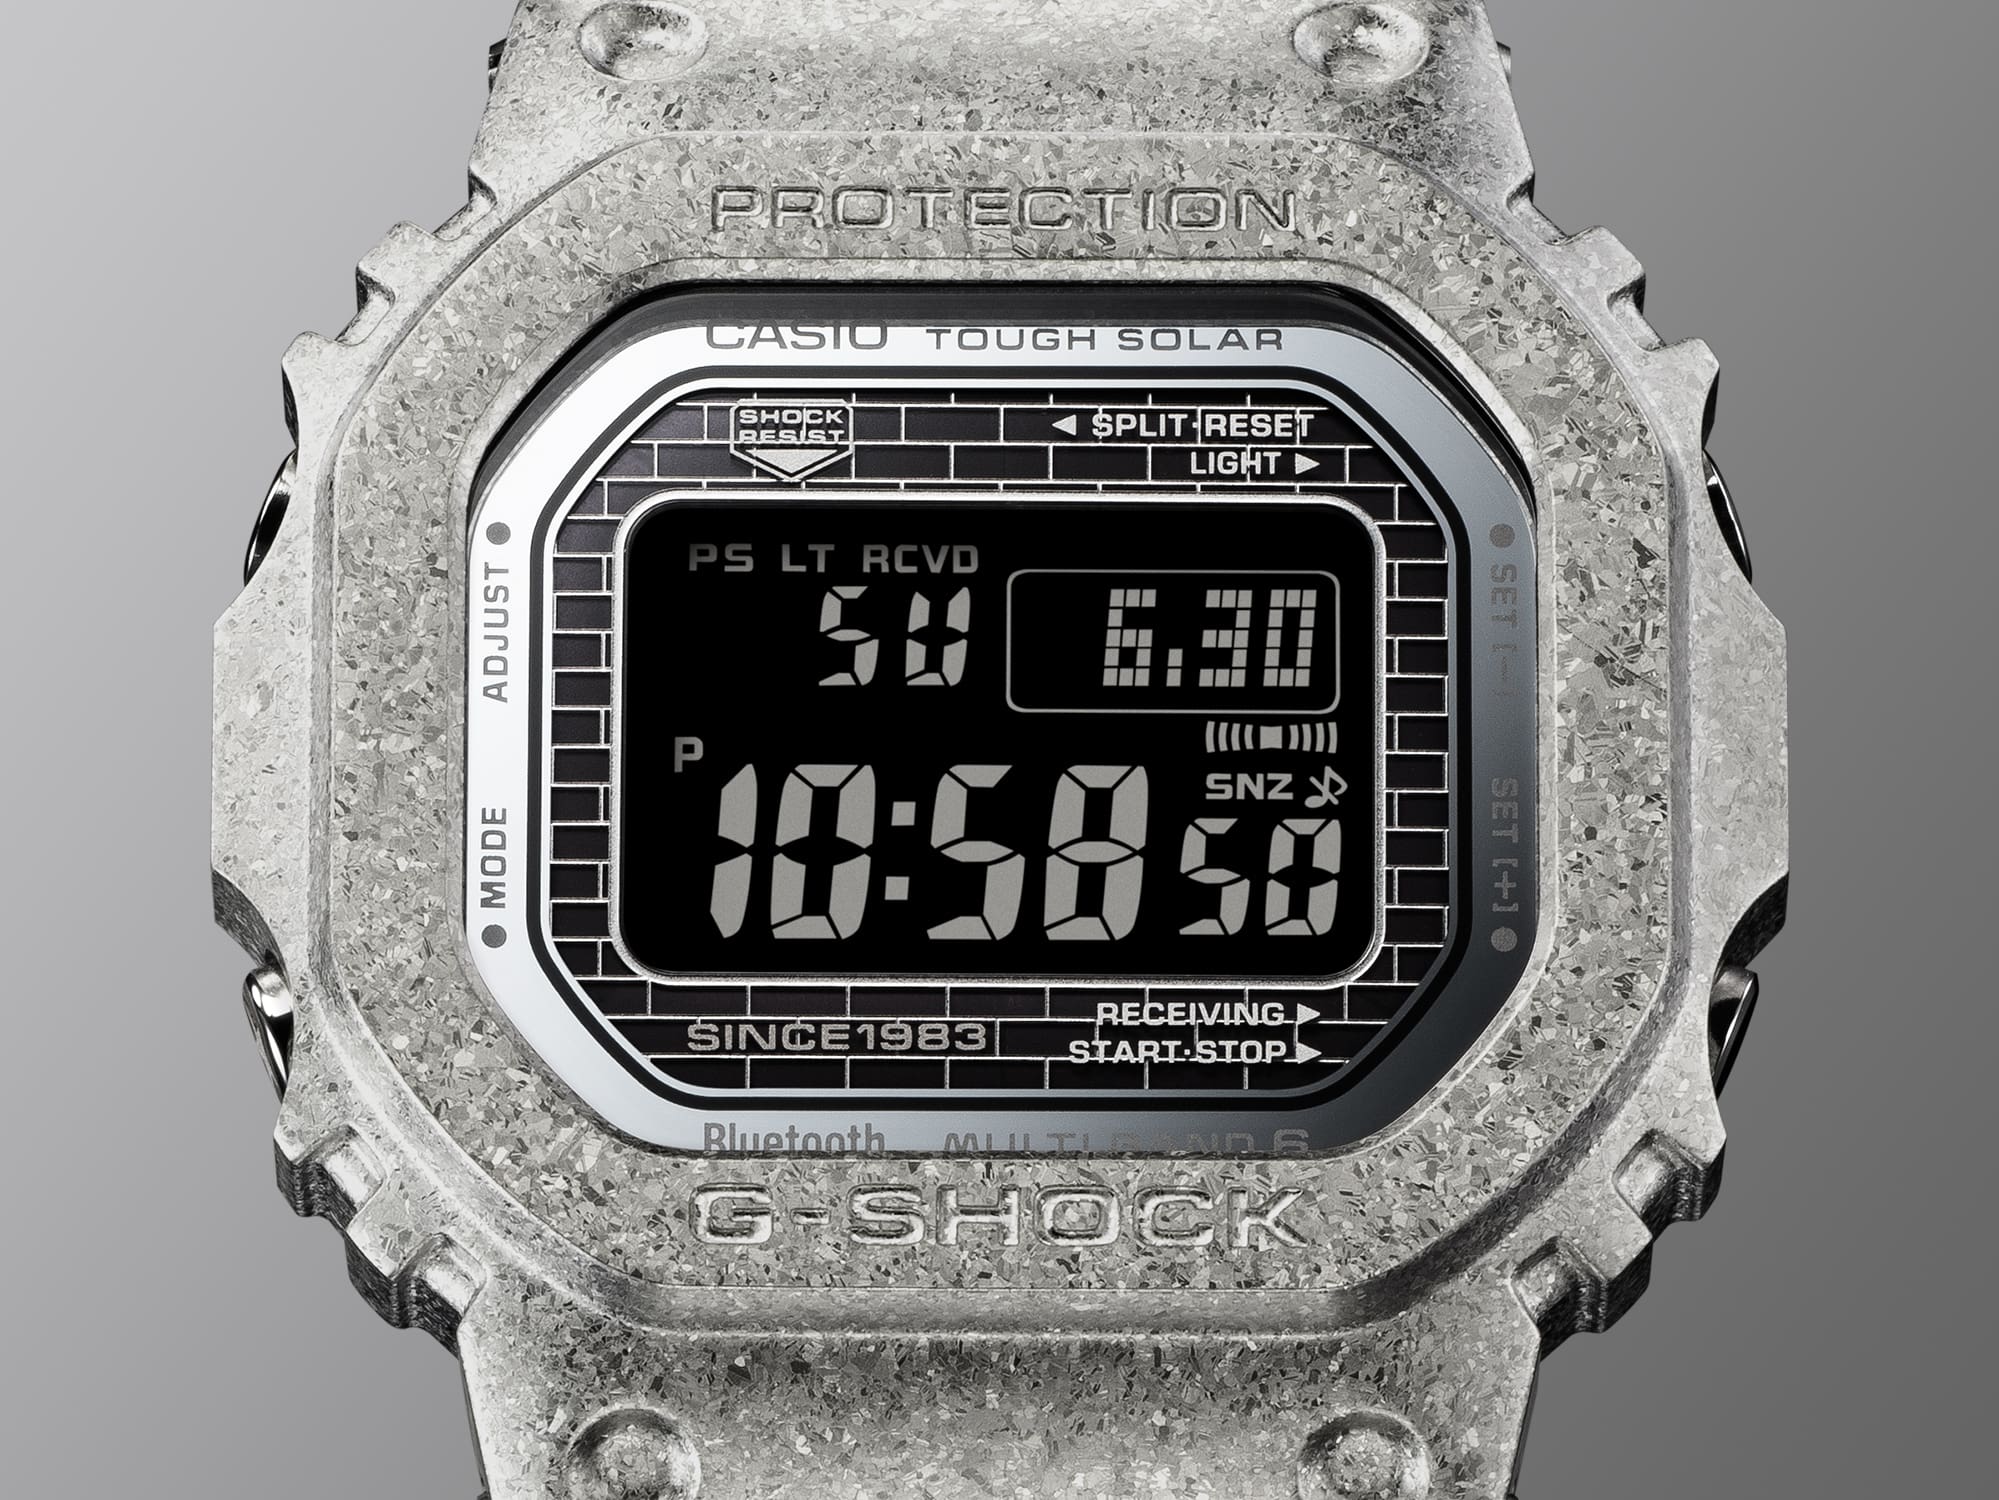 Digital G-SHOCK watch with marbled bezel